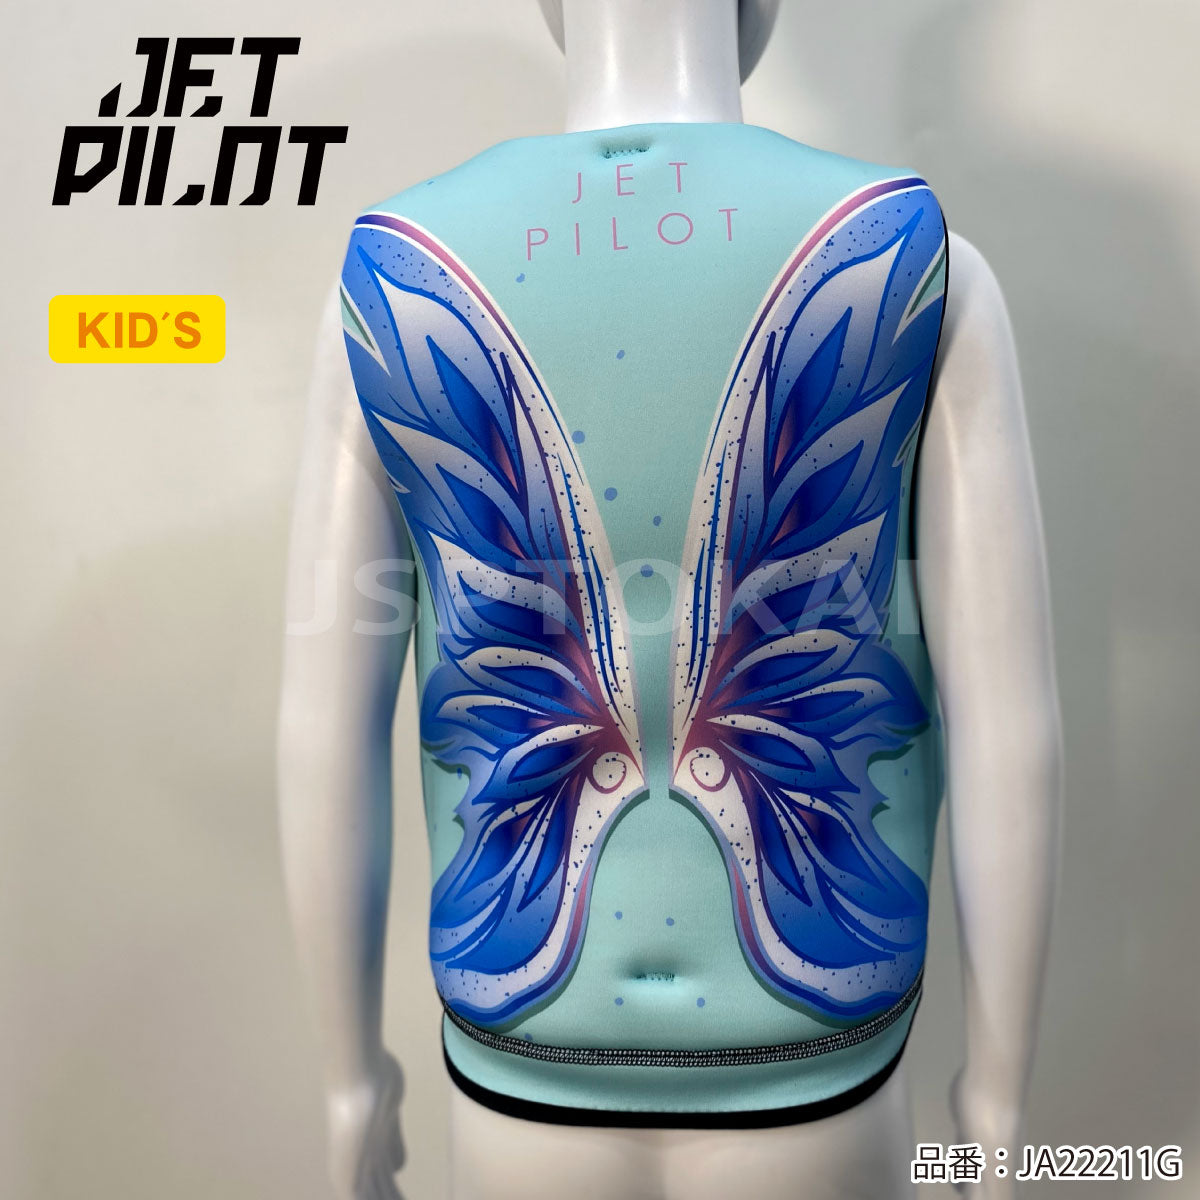 JETPILOT Jet Pilot Life Jacket Children Kids Life Vest JA22211G Pool Beach Junior